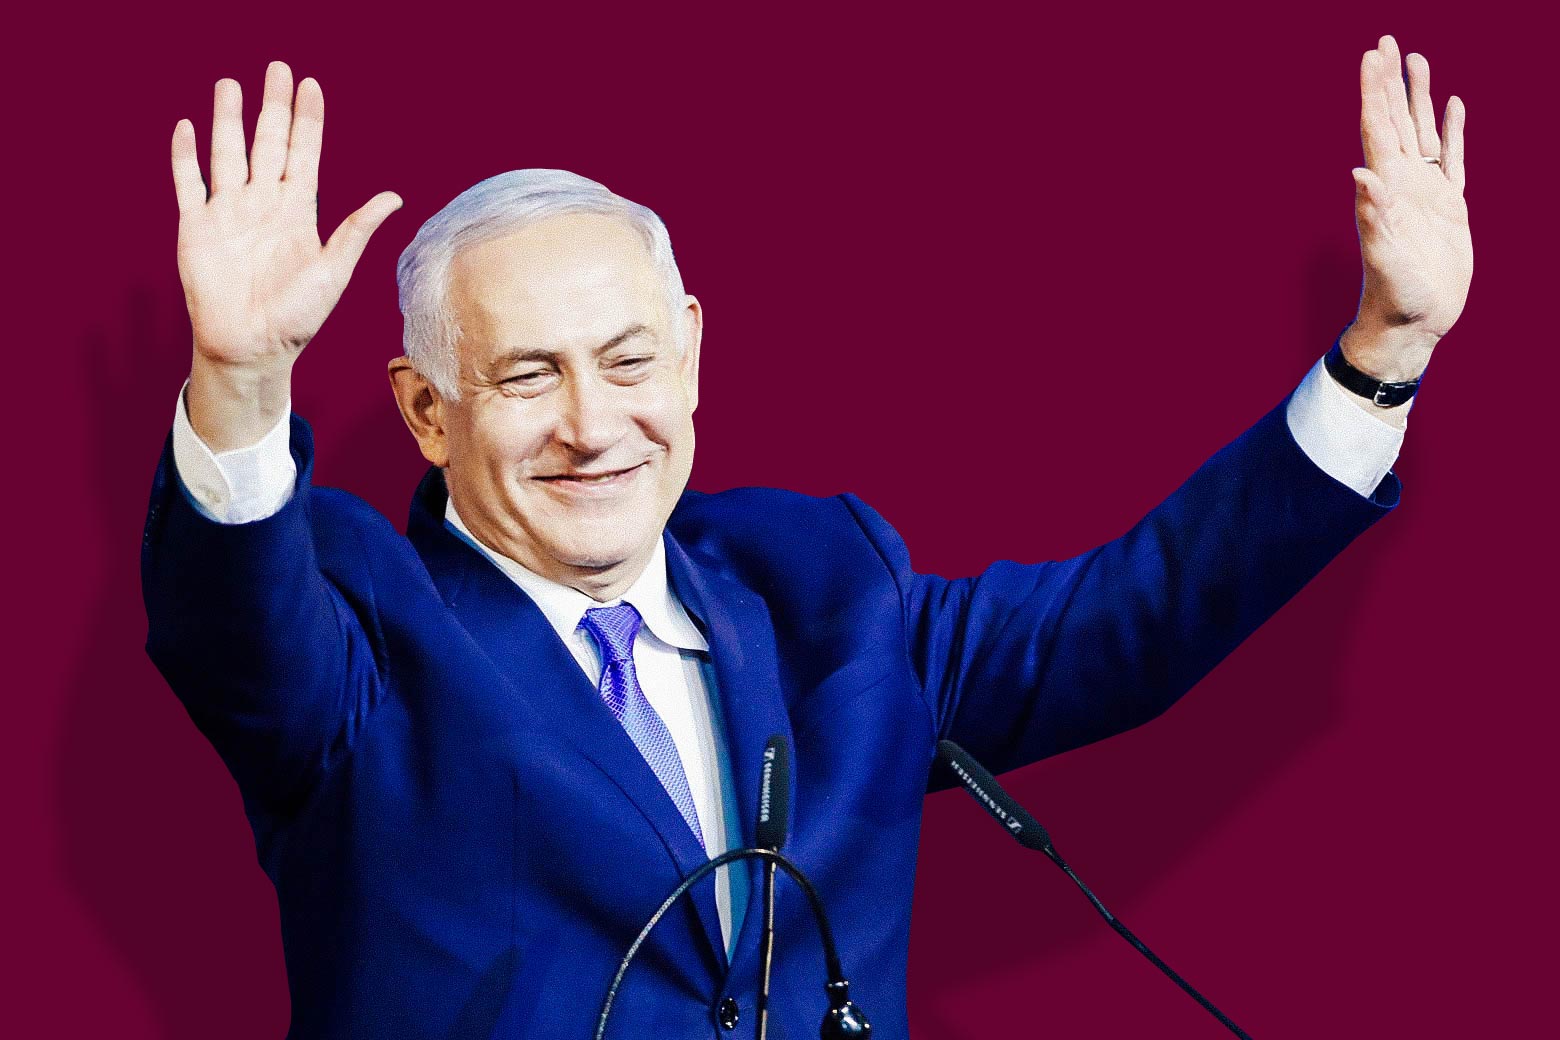 Israeli Prime Minister Benjamin Netanyahu with arms raised